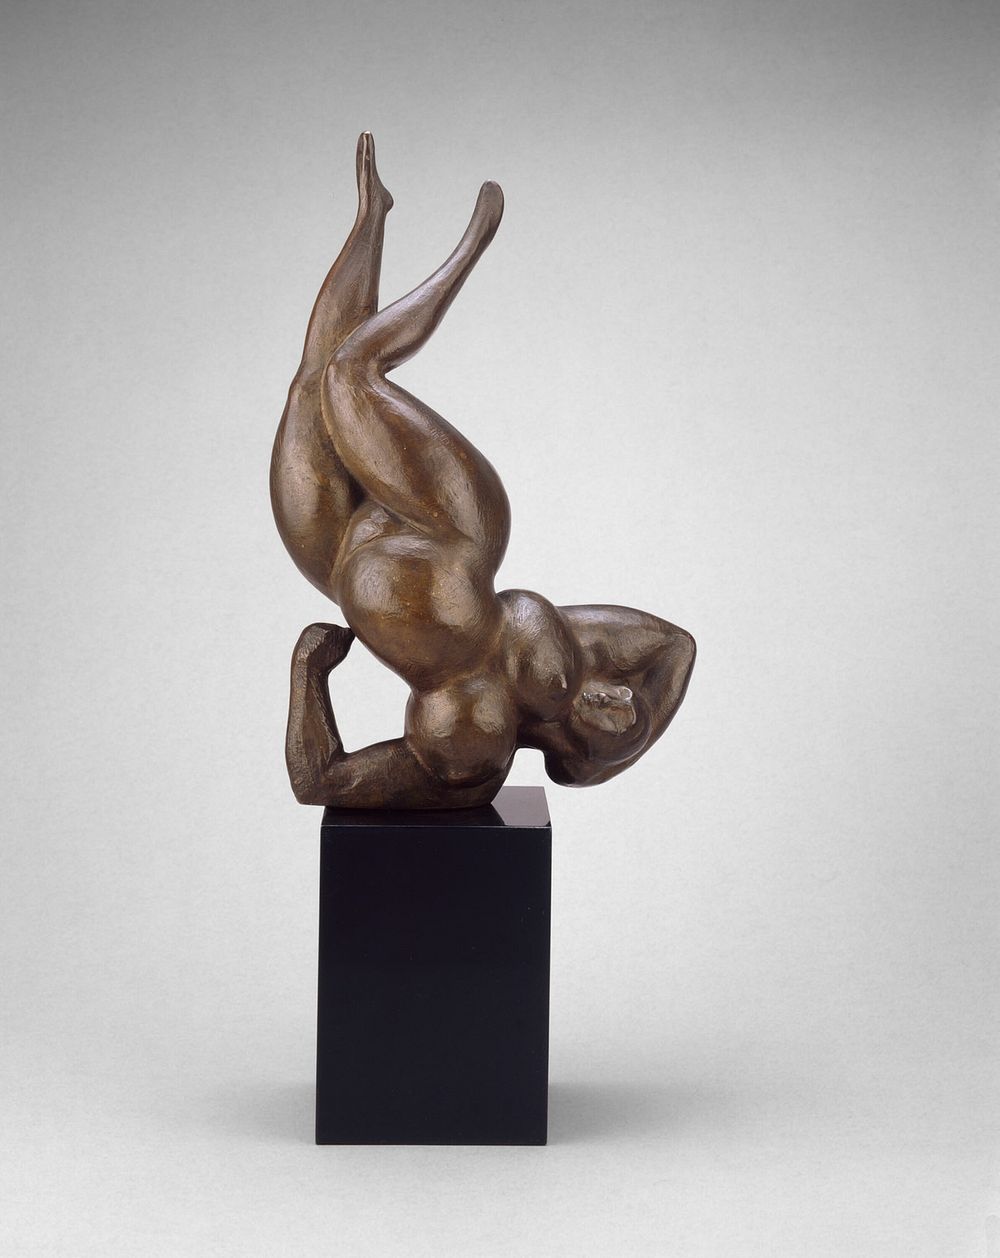 "Acrobat" Upside Down Figure by Gaston Lachaise